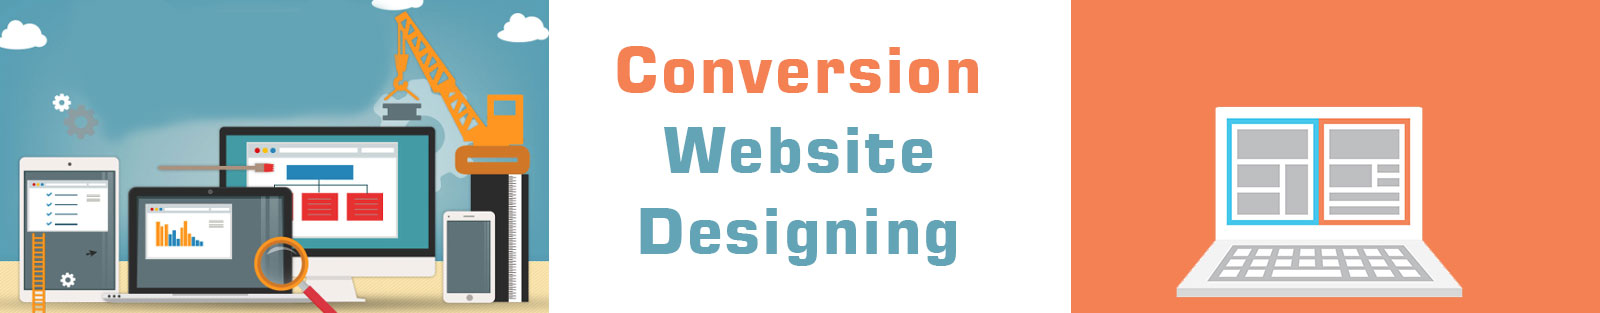 Conversion Website Designing Services